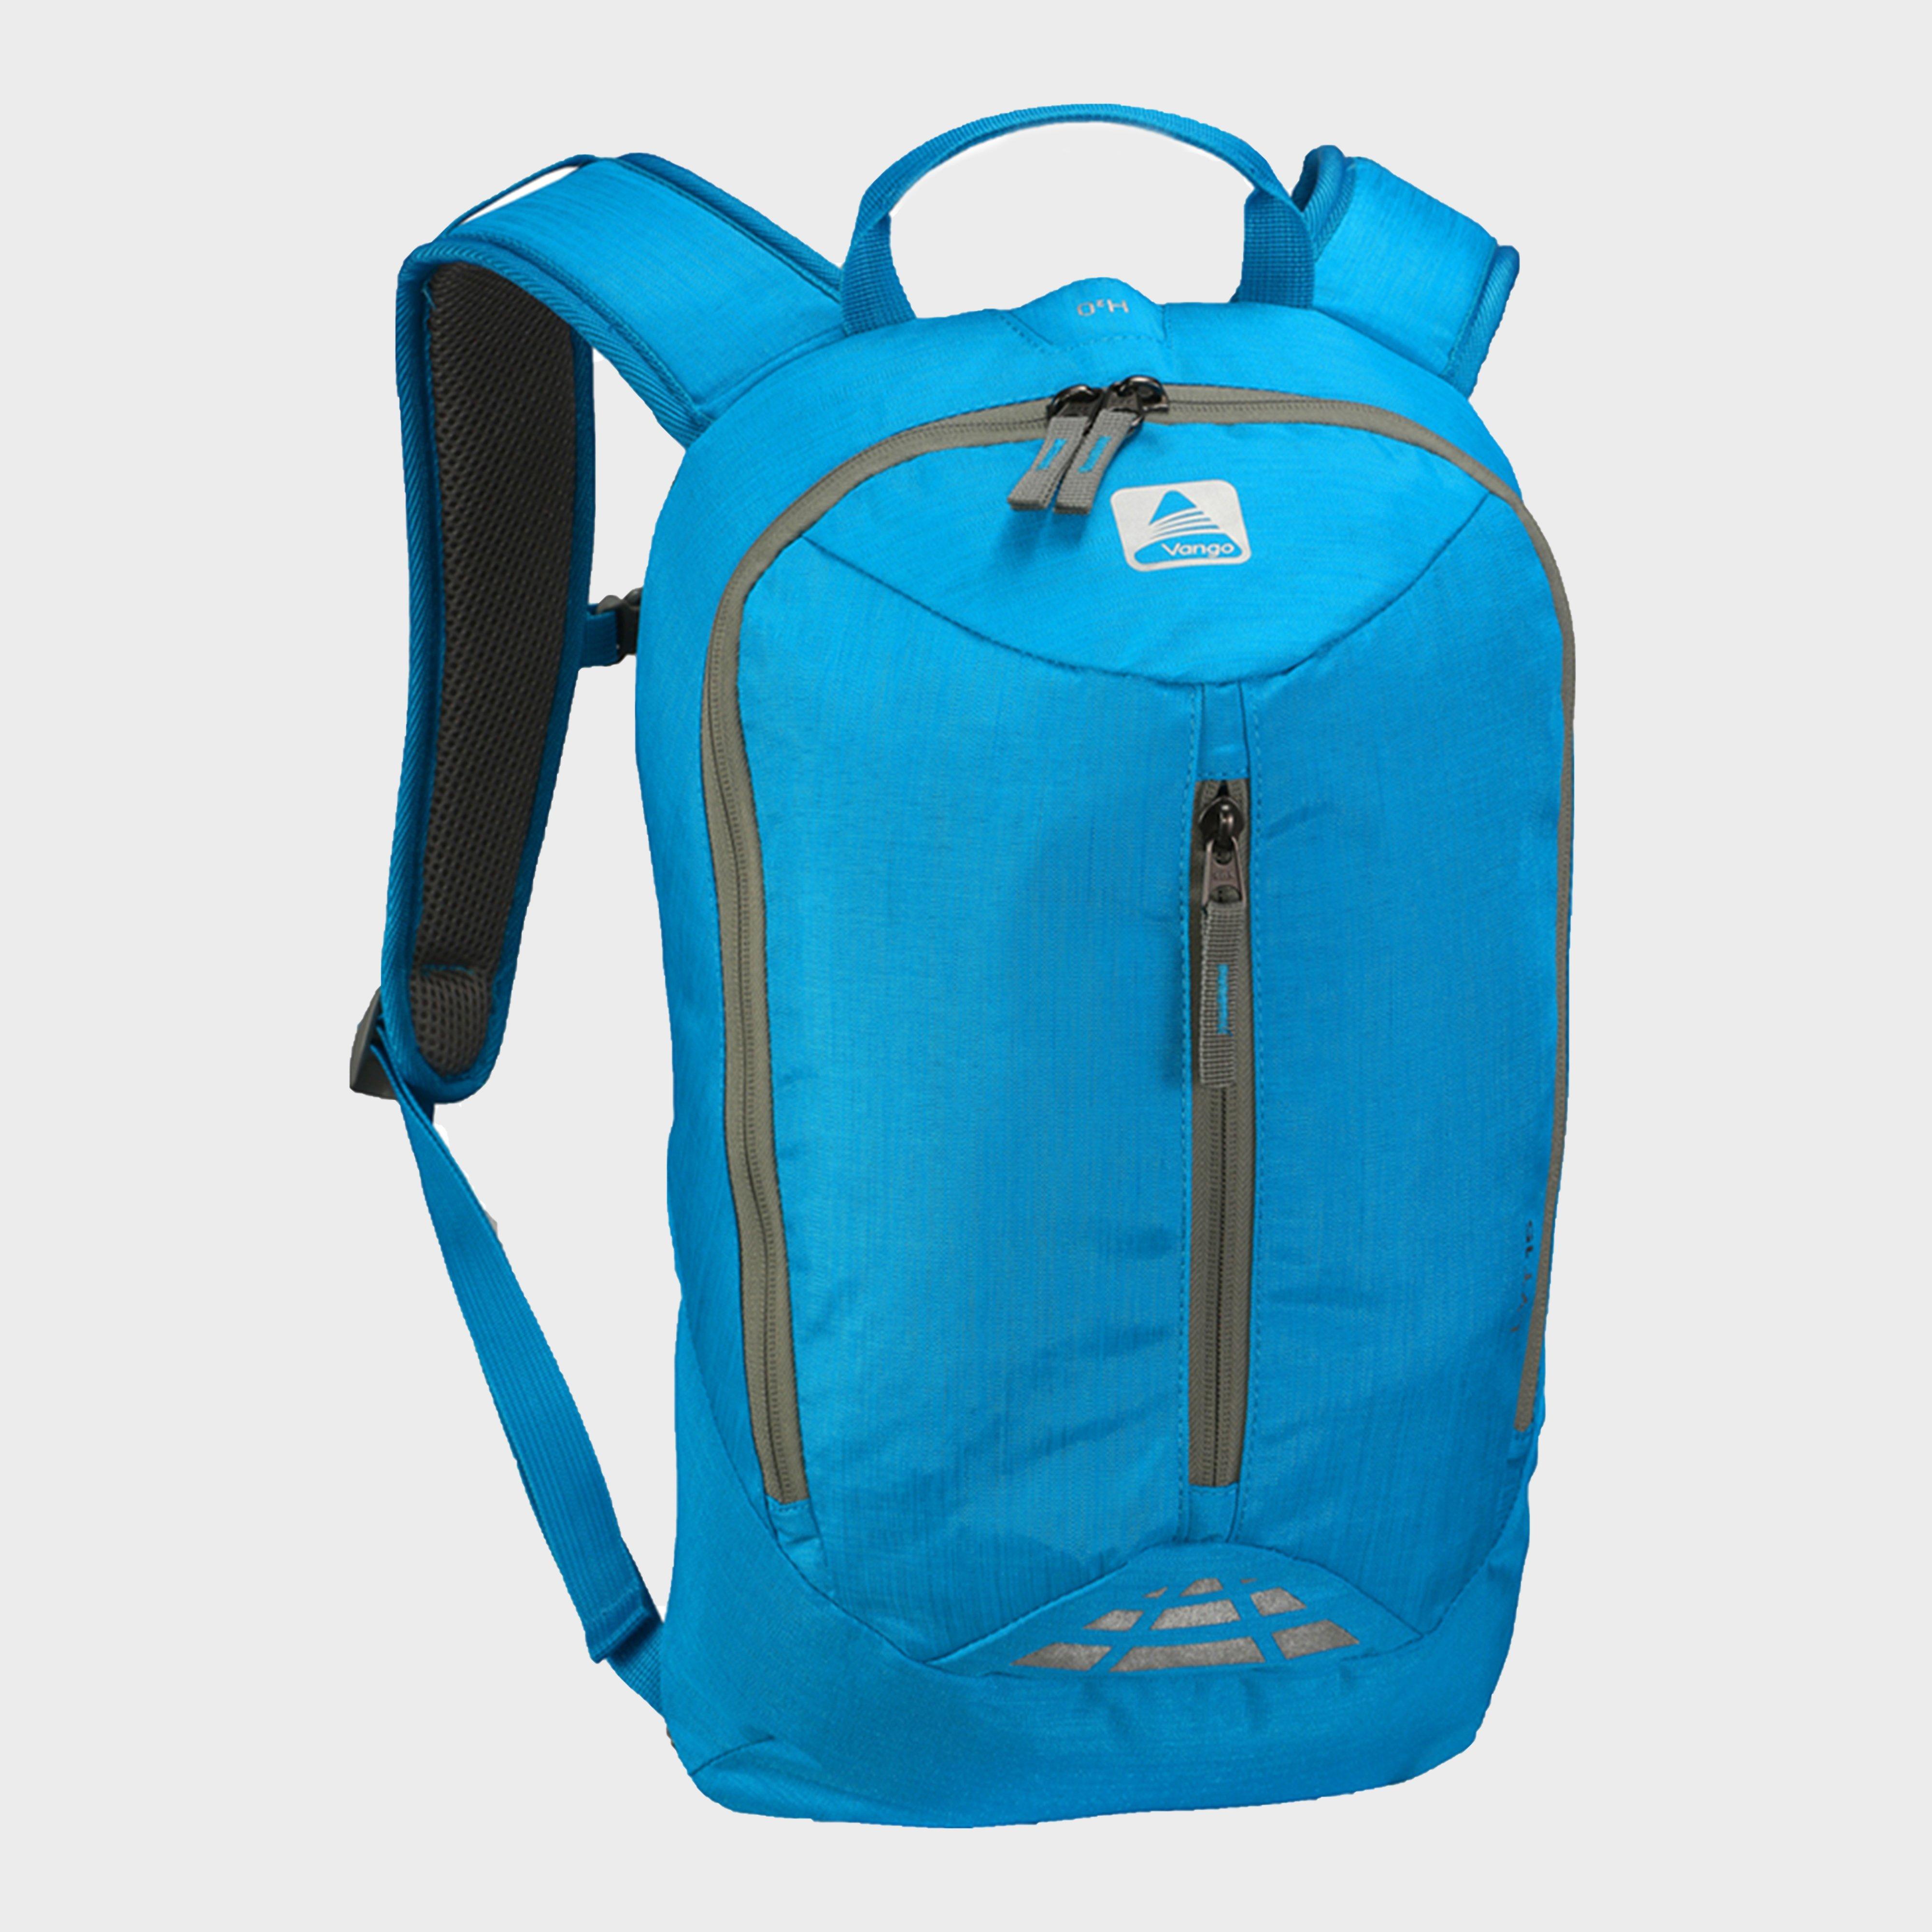 Vango Lyt 15 Backpack - Blue/15  Blue/15